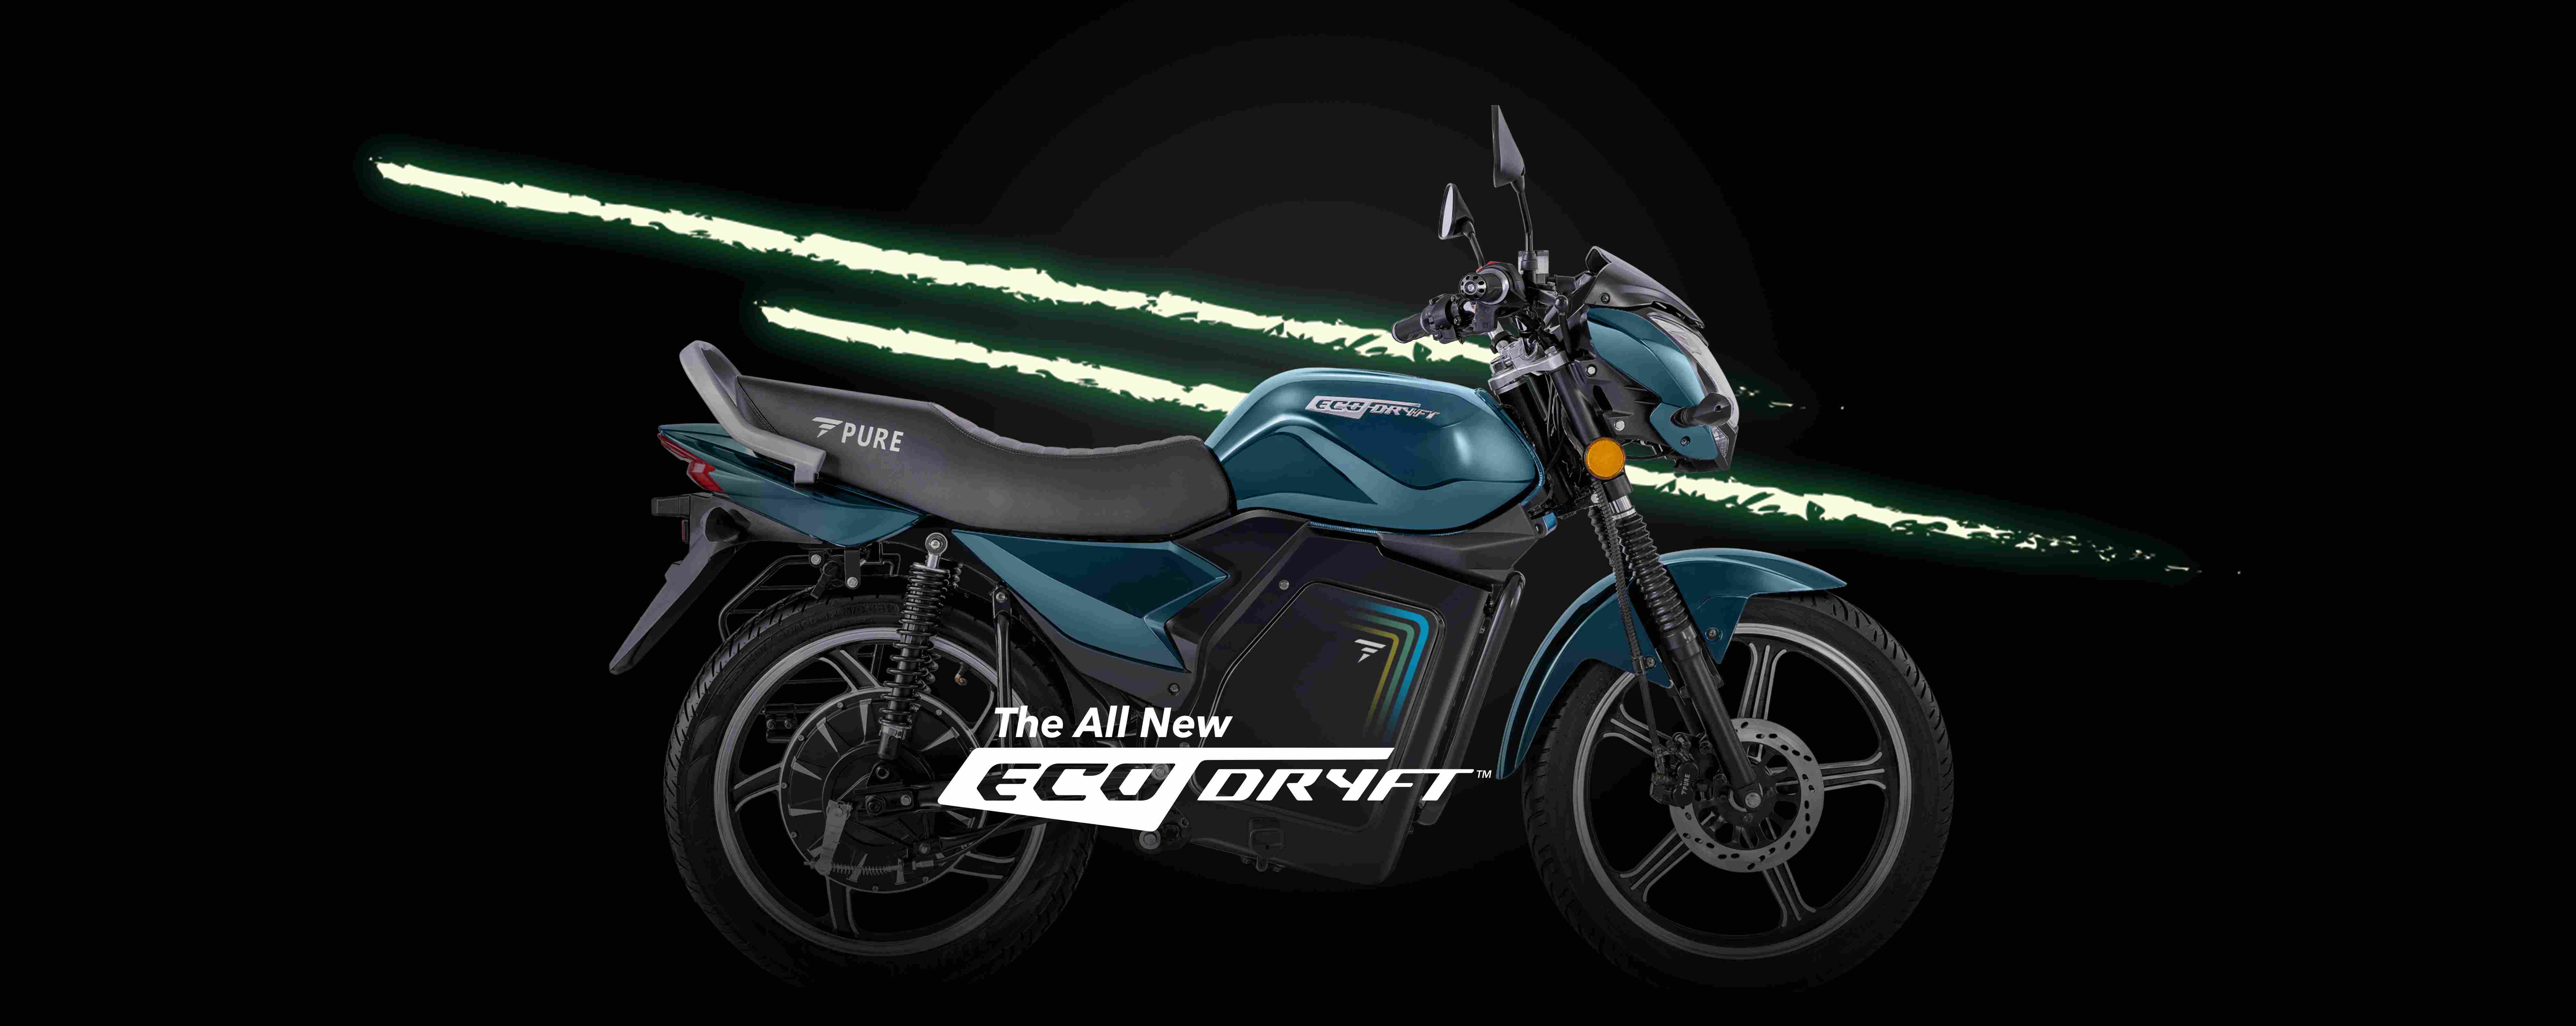 Pure EV ecoDryft - Blue